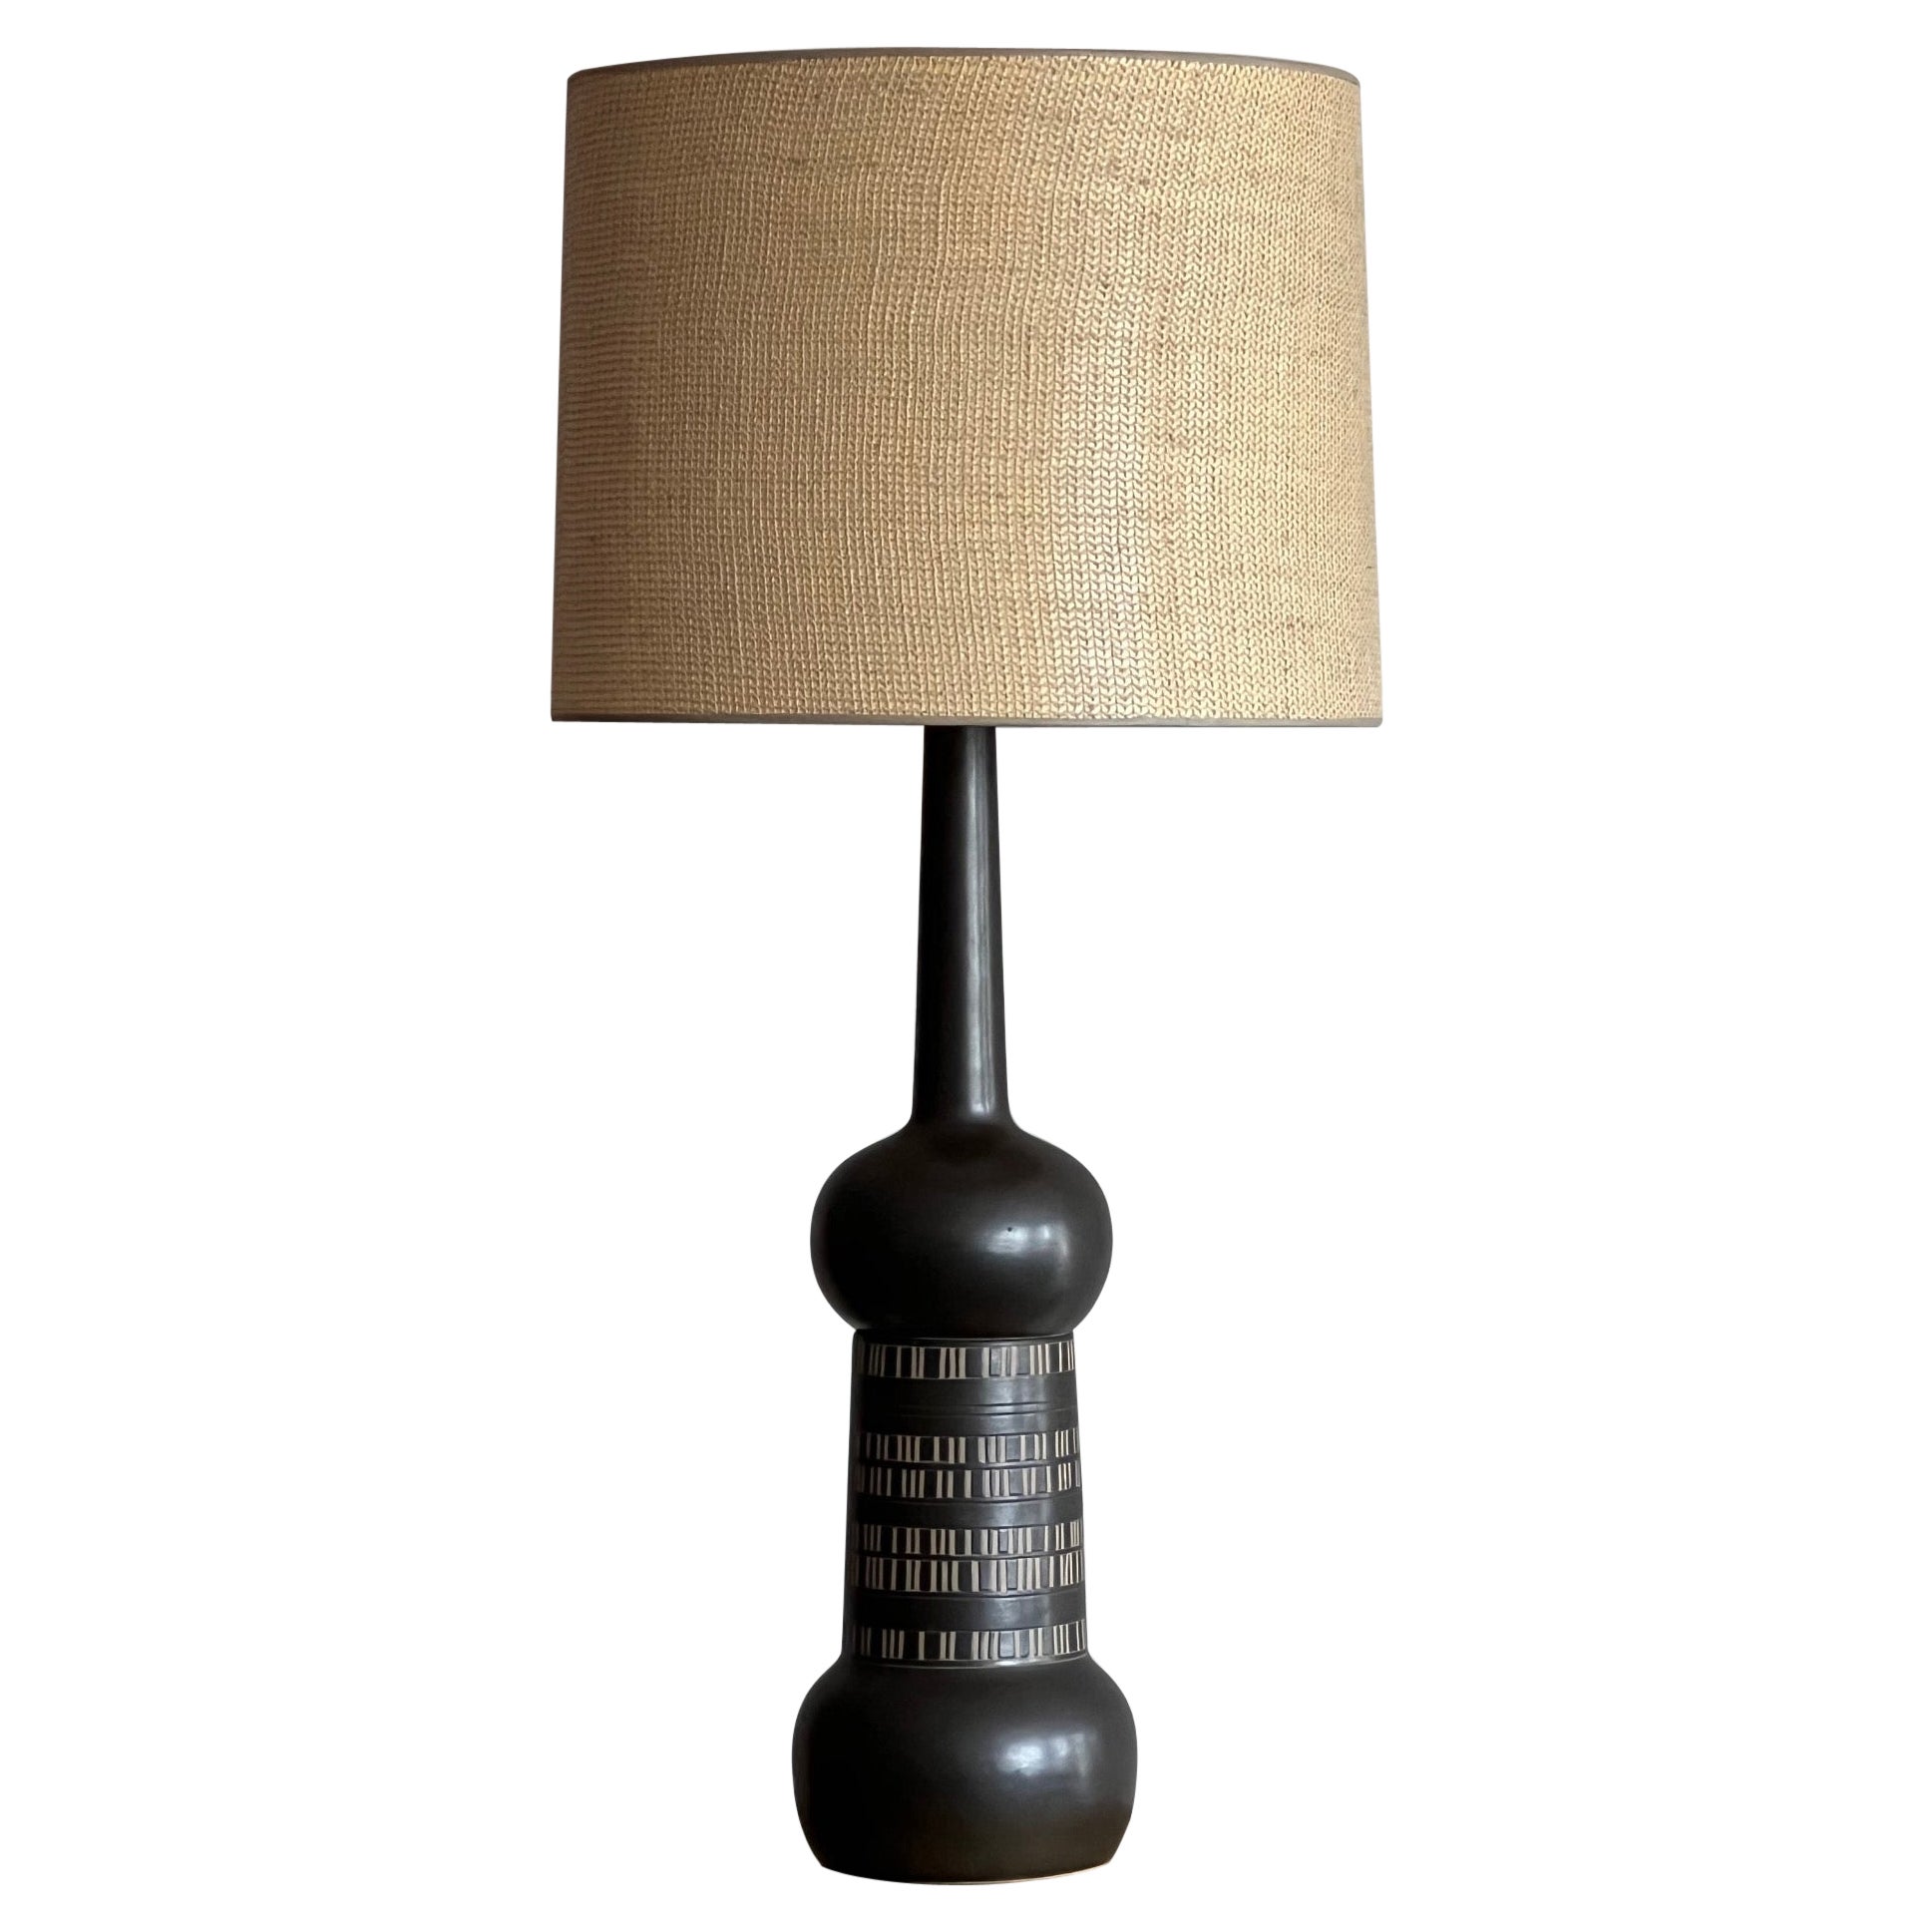 Unusual Martz Table Lamp For Sale